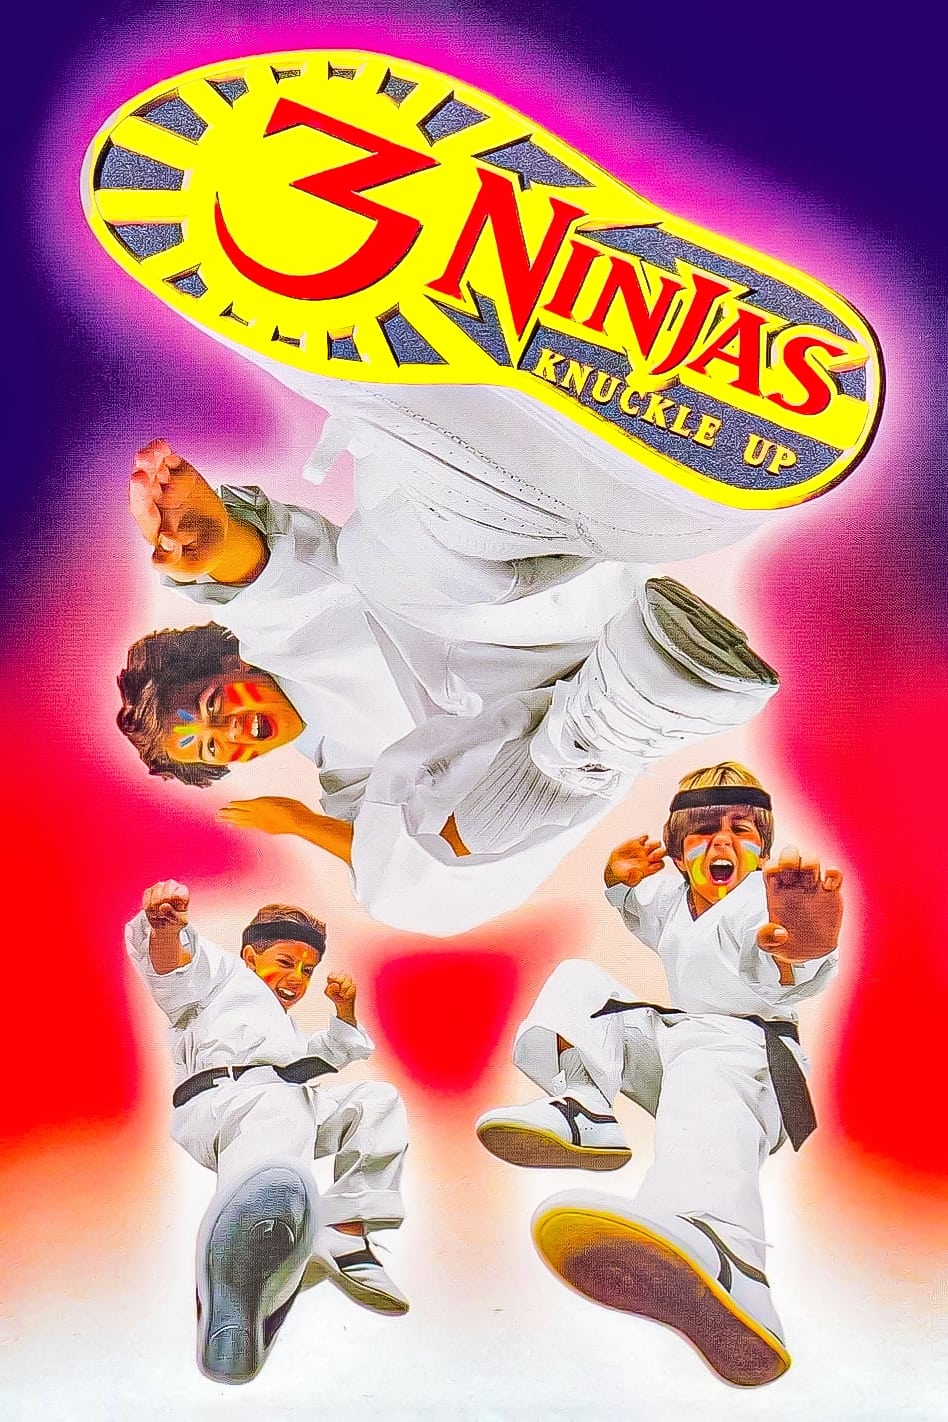 3 Ninjas Knuckle Up (1993)